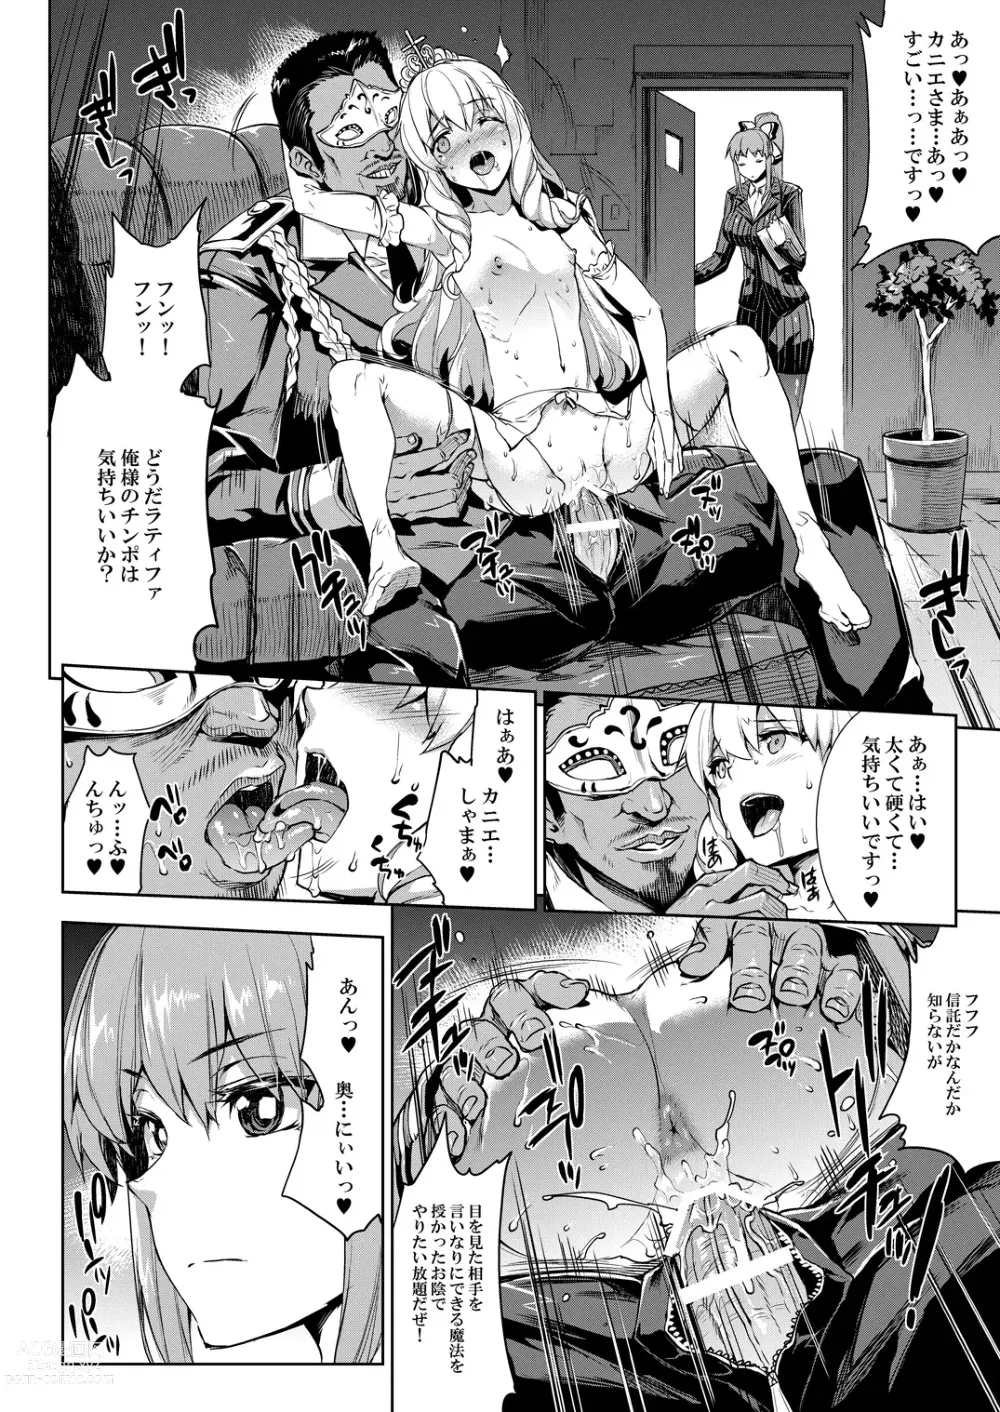 Page 5 of doujinshi Amagi Erect Sawaru Parade